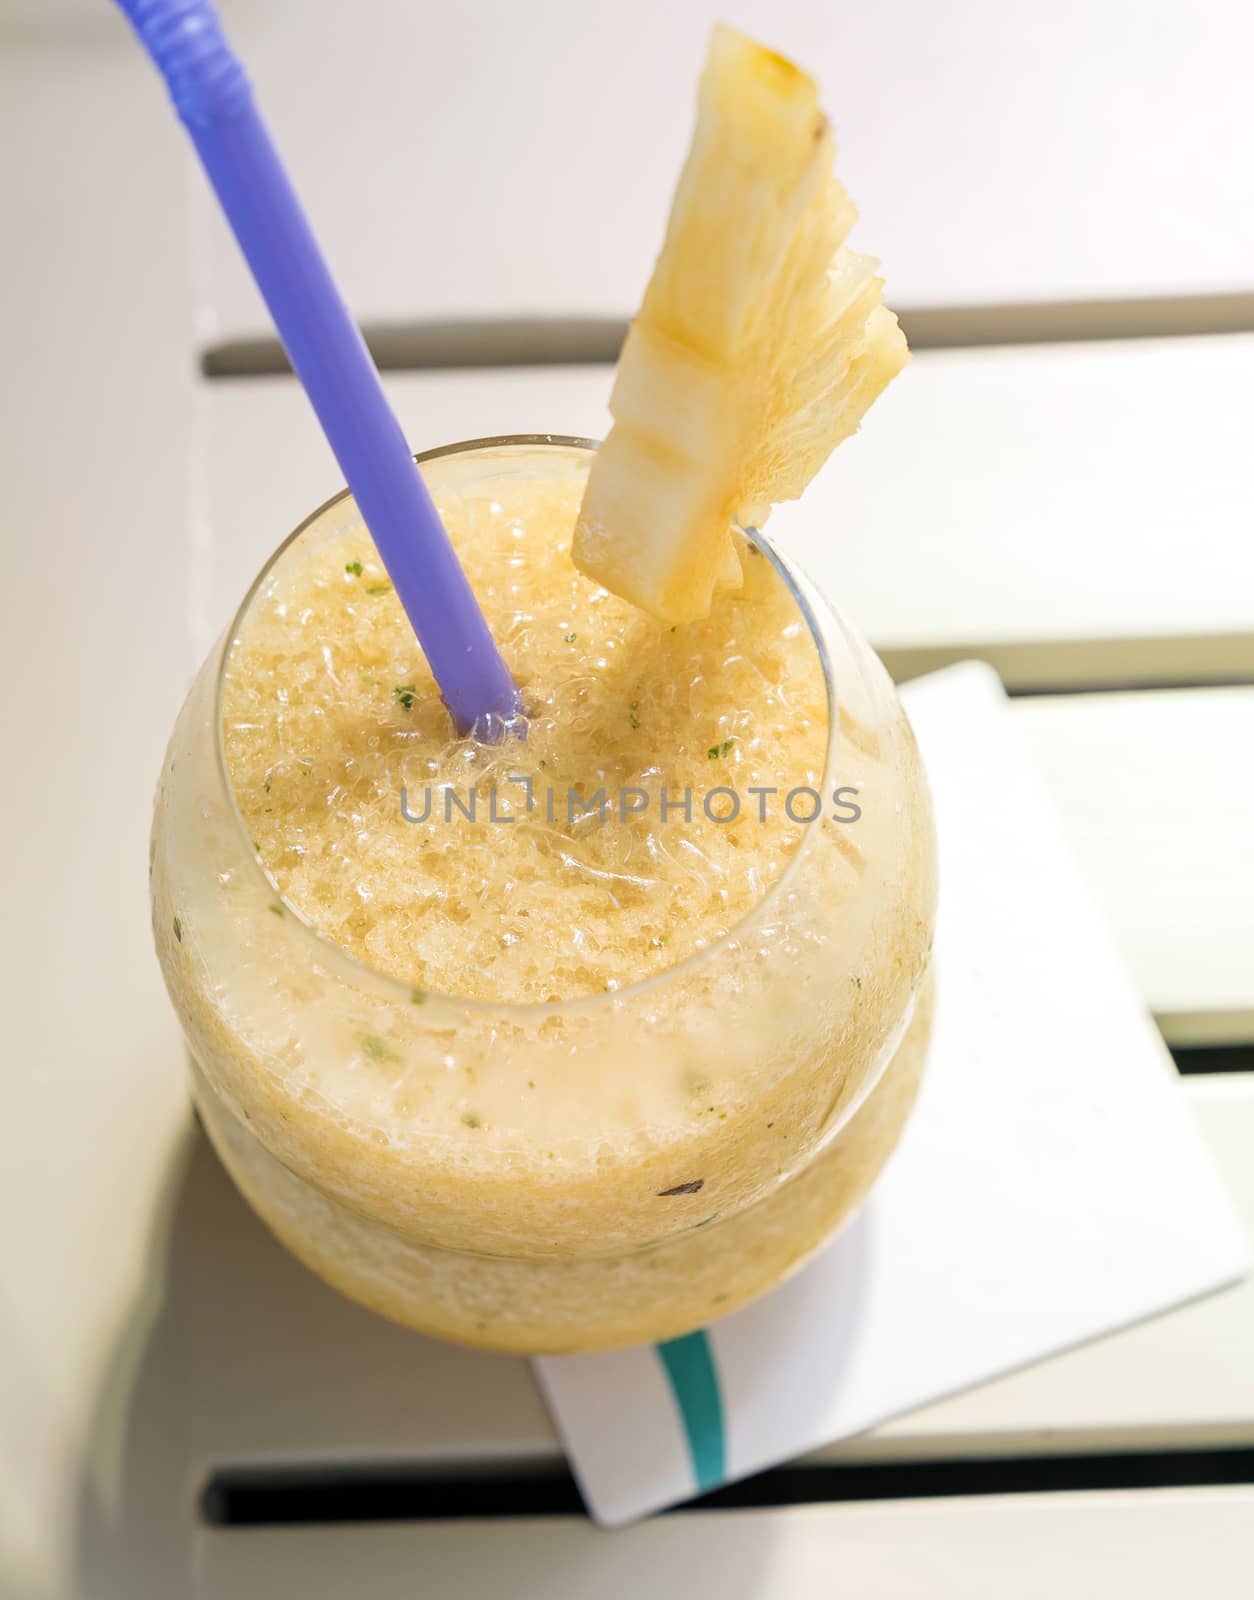 Pineapple juice by vichie81